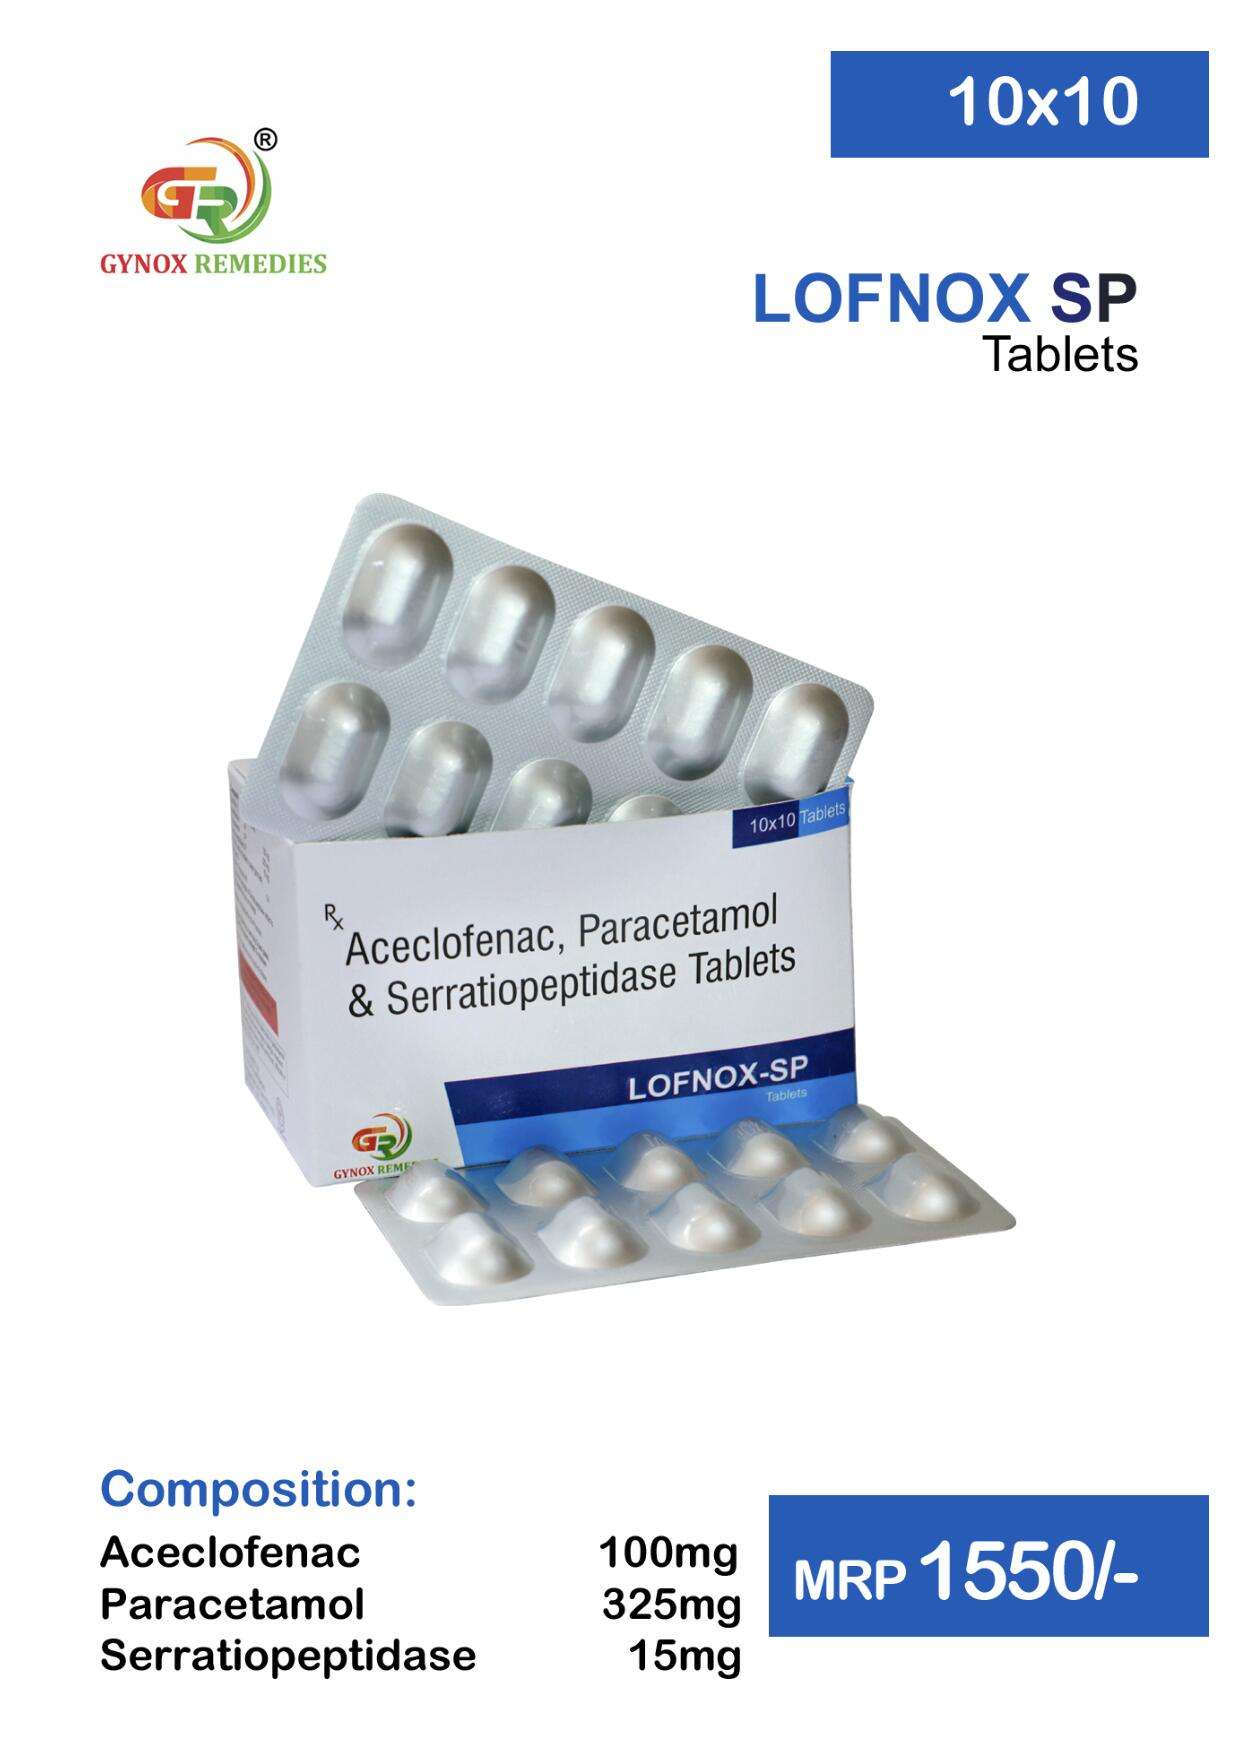 aceclofenac 100 mg+ paracetamol 325 mg+ serratiopeptidase (as enteric coated granules) 15mg